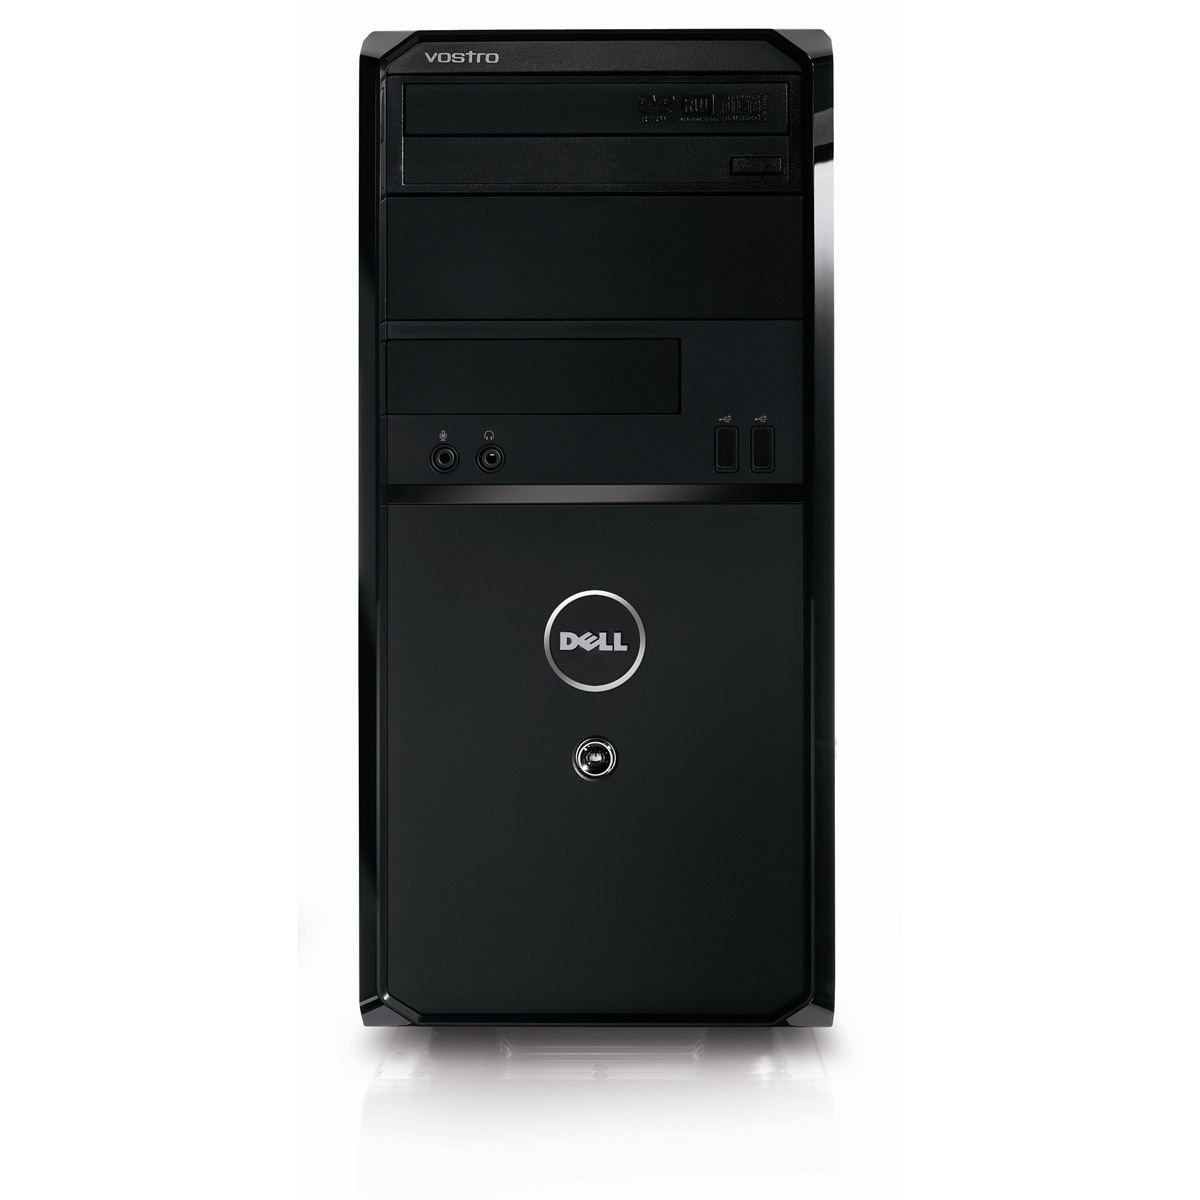 Dell Vostro 230 MT - PC de bureau Dell sur LDLC.com